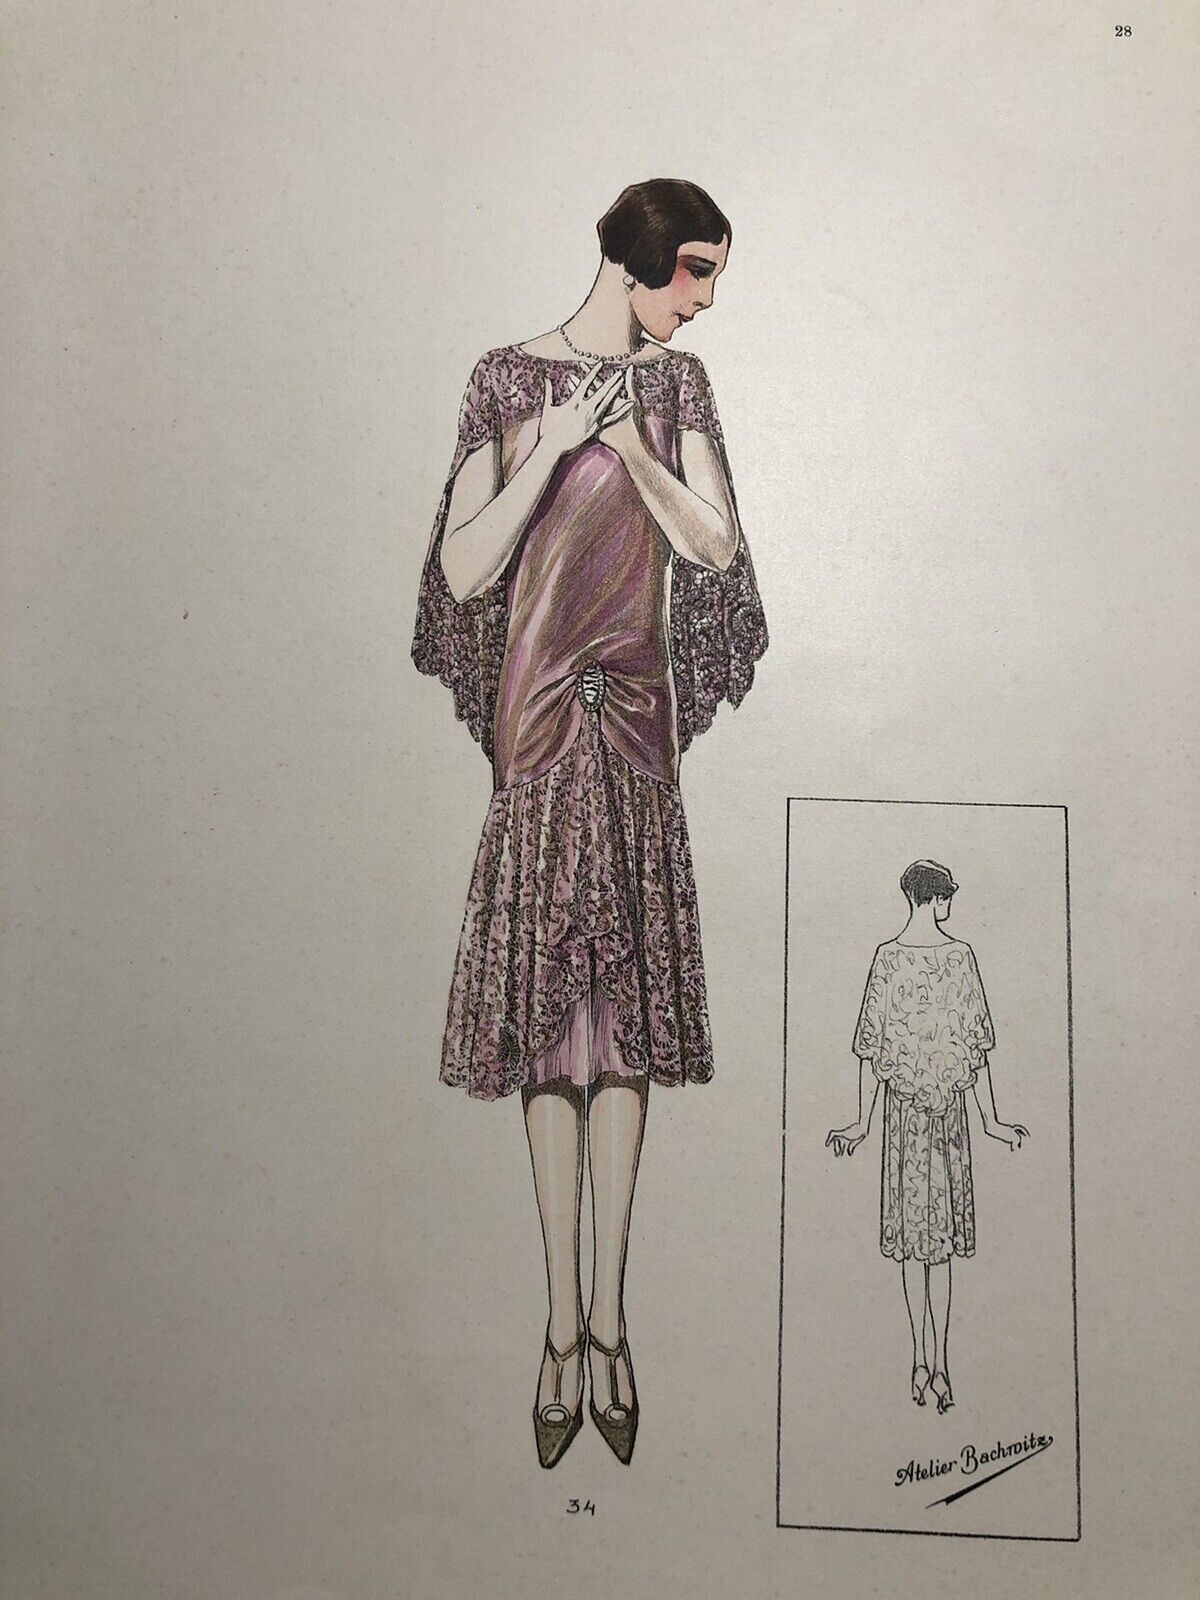 Vintage Art Deco Atelier Bachroitz Hand Colored French Flapper Fashion Print 28